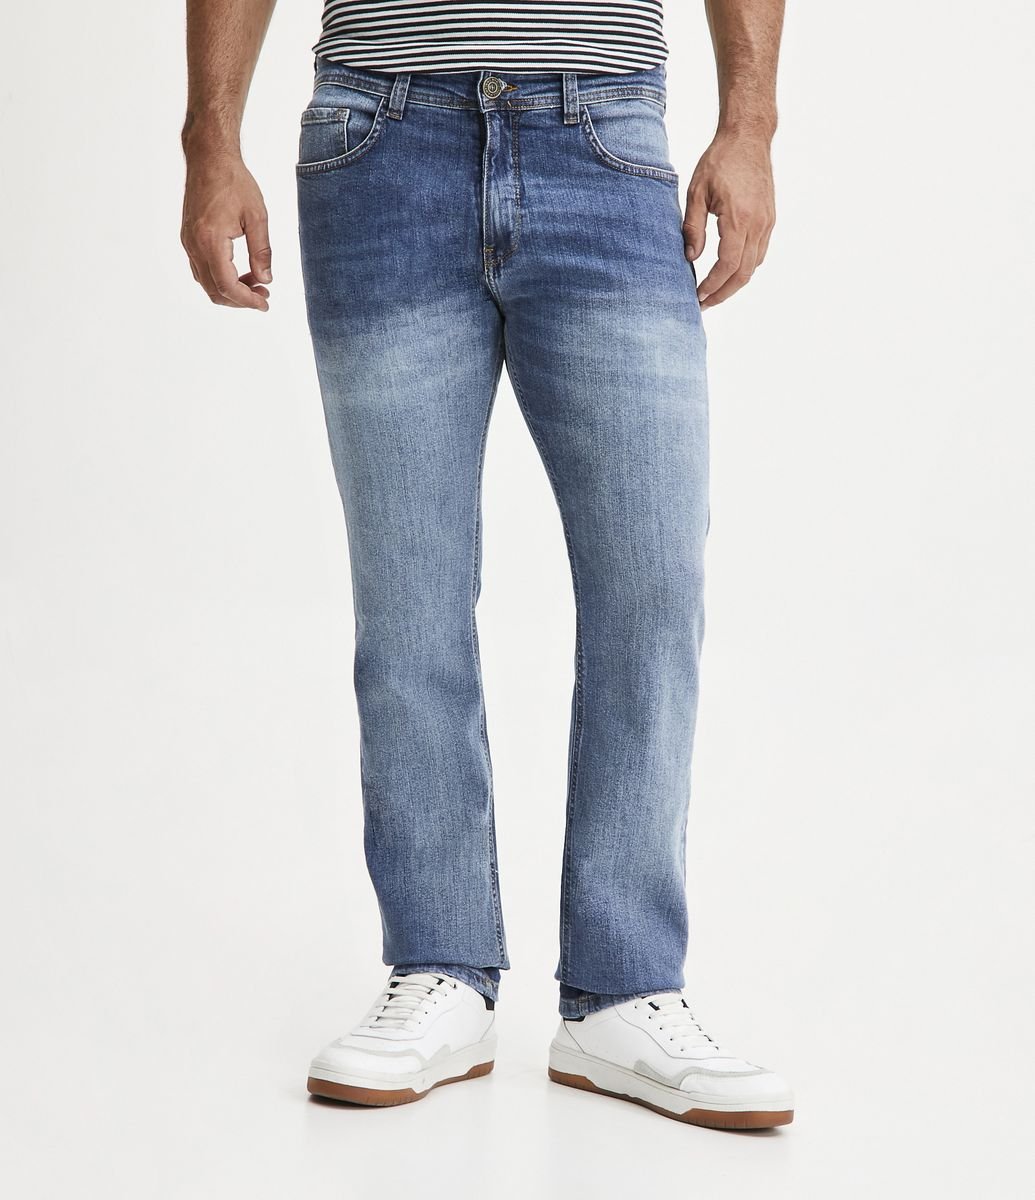 lojas renner calças jeans masculinas